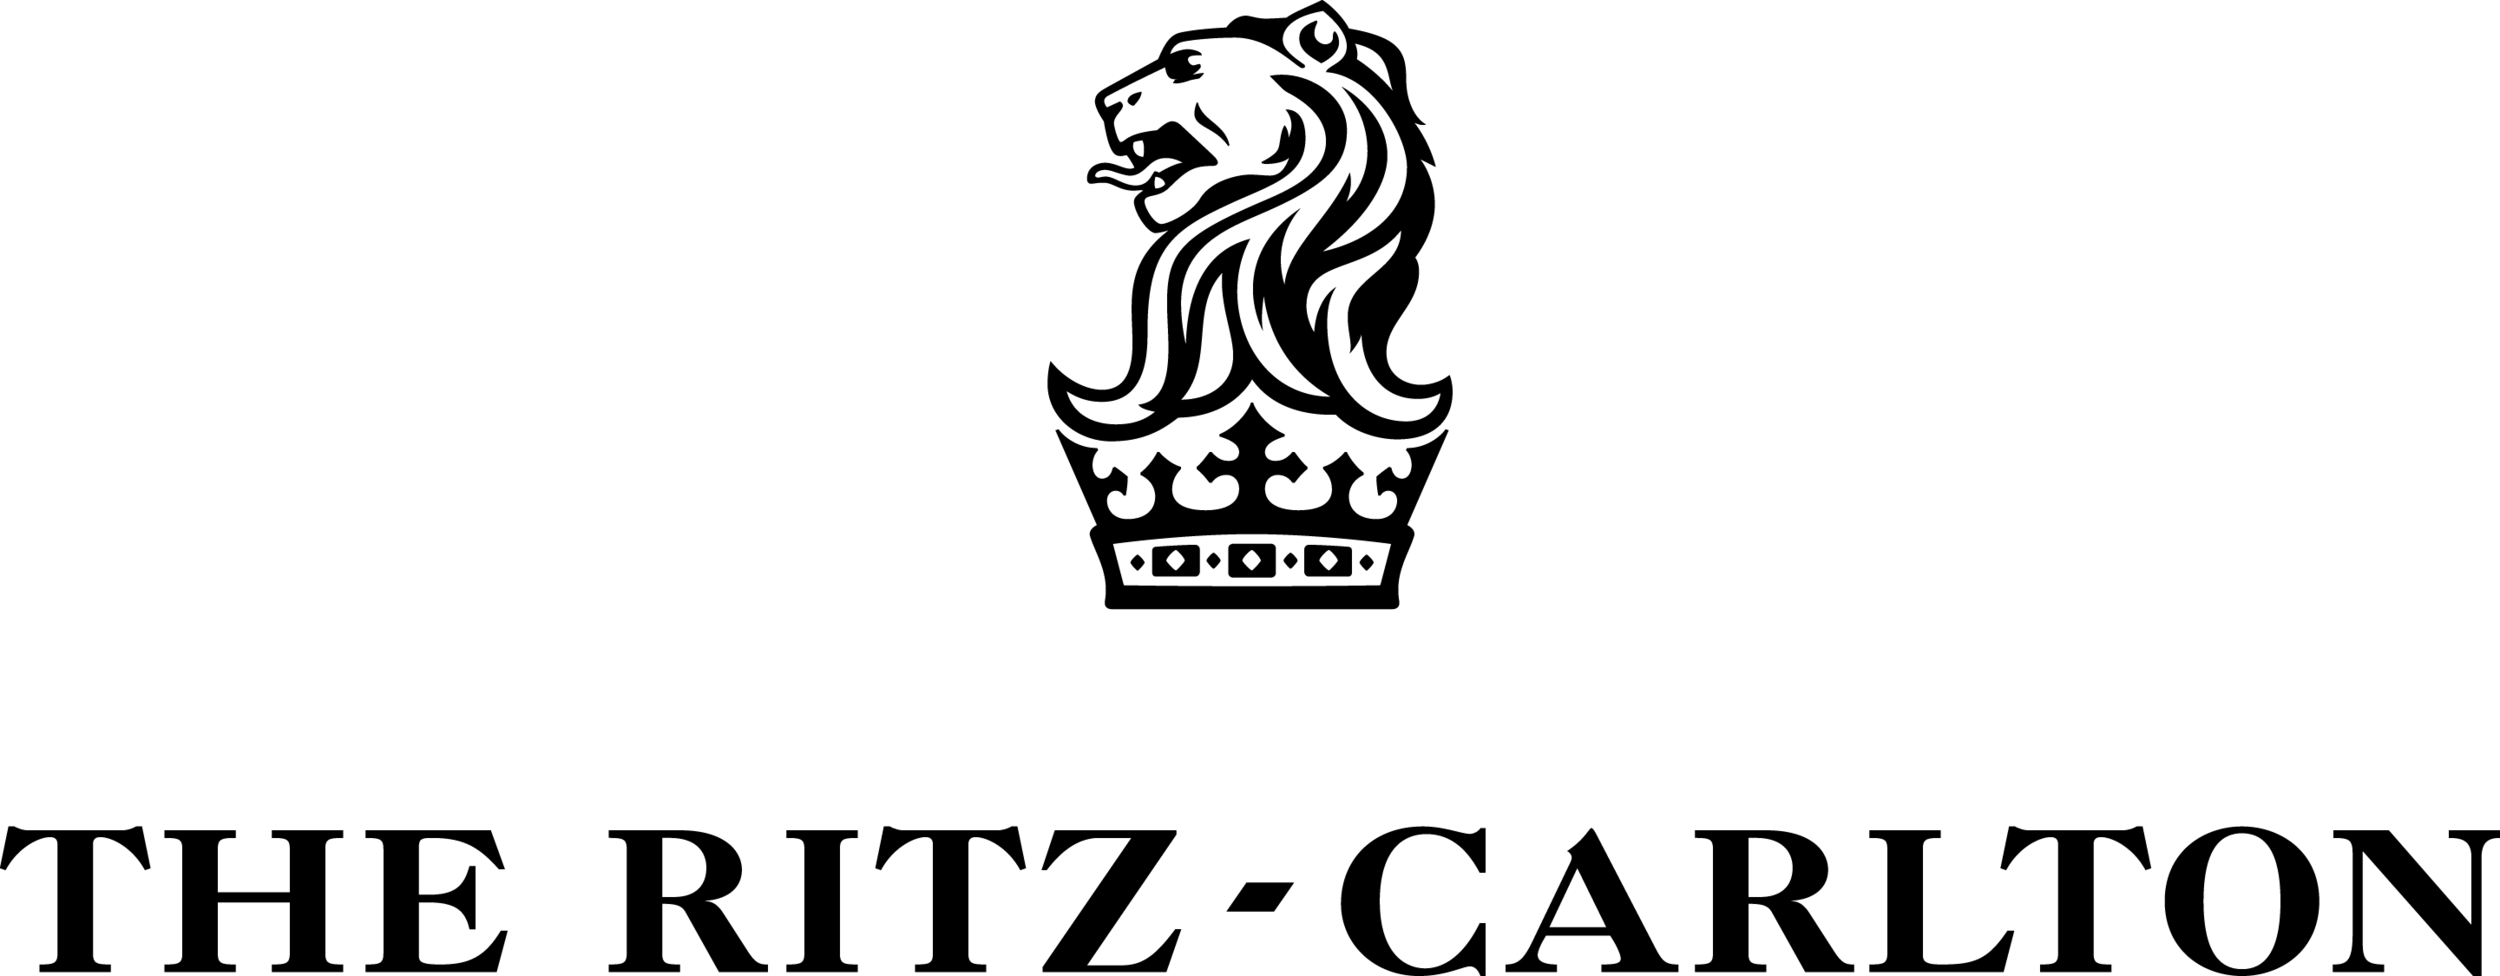 ritz-carlton-logo.png